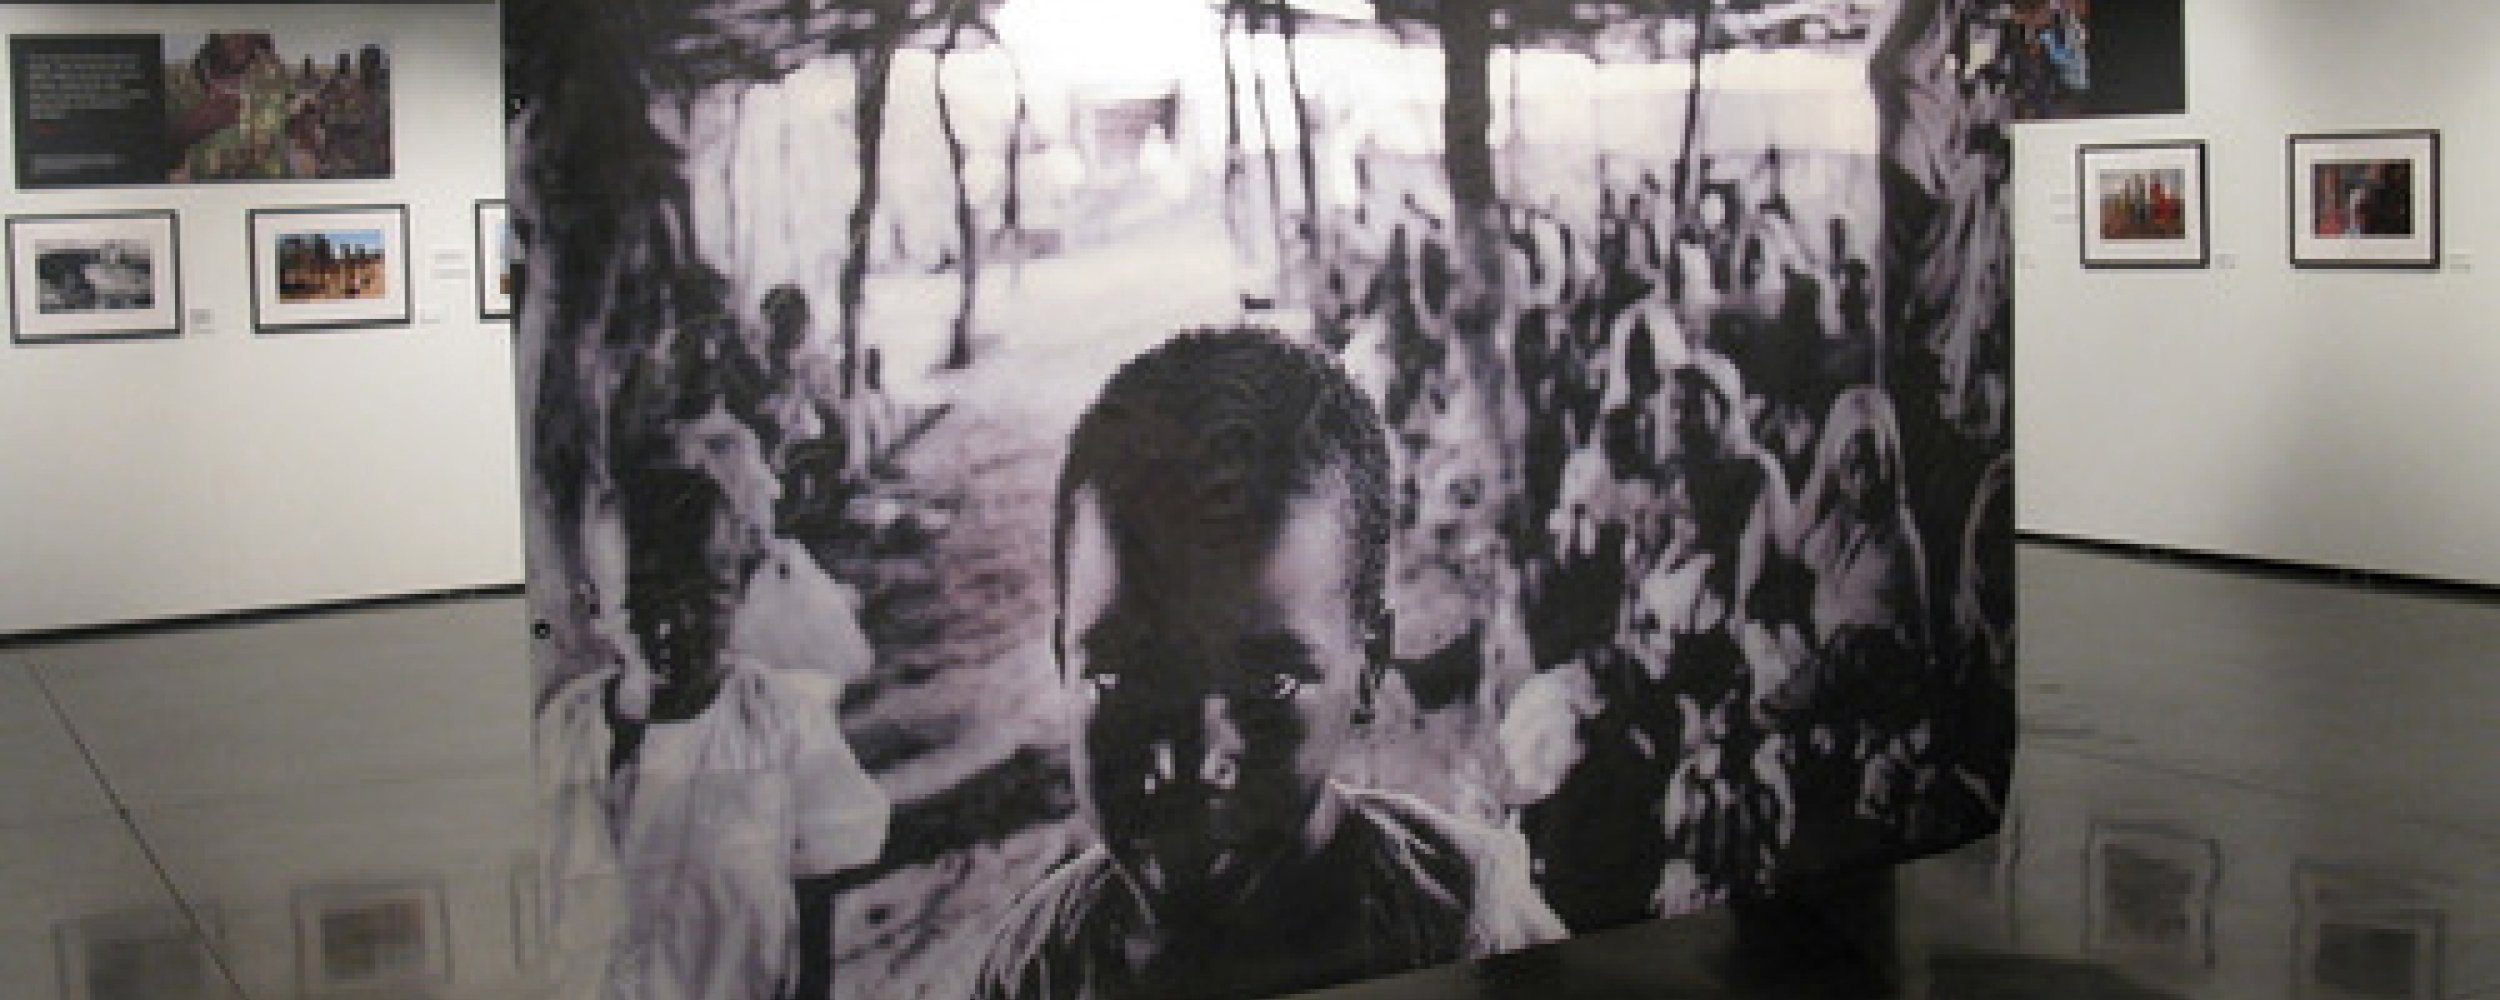 Darfur_Illonois_holocaust_museum_03.jpg